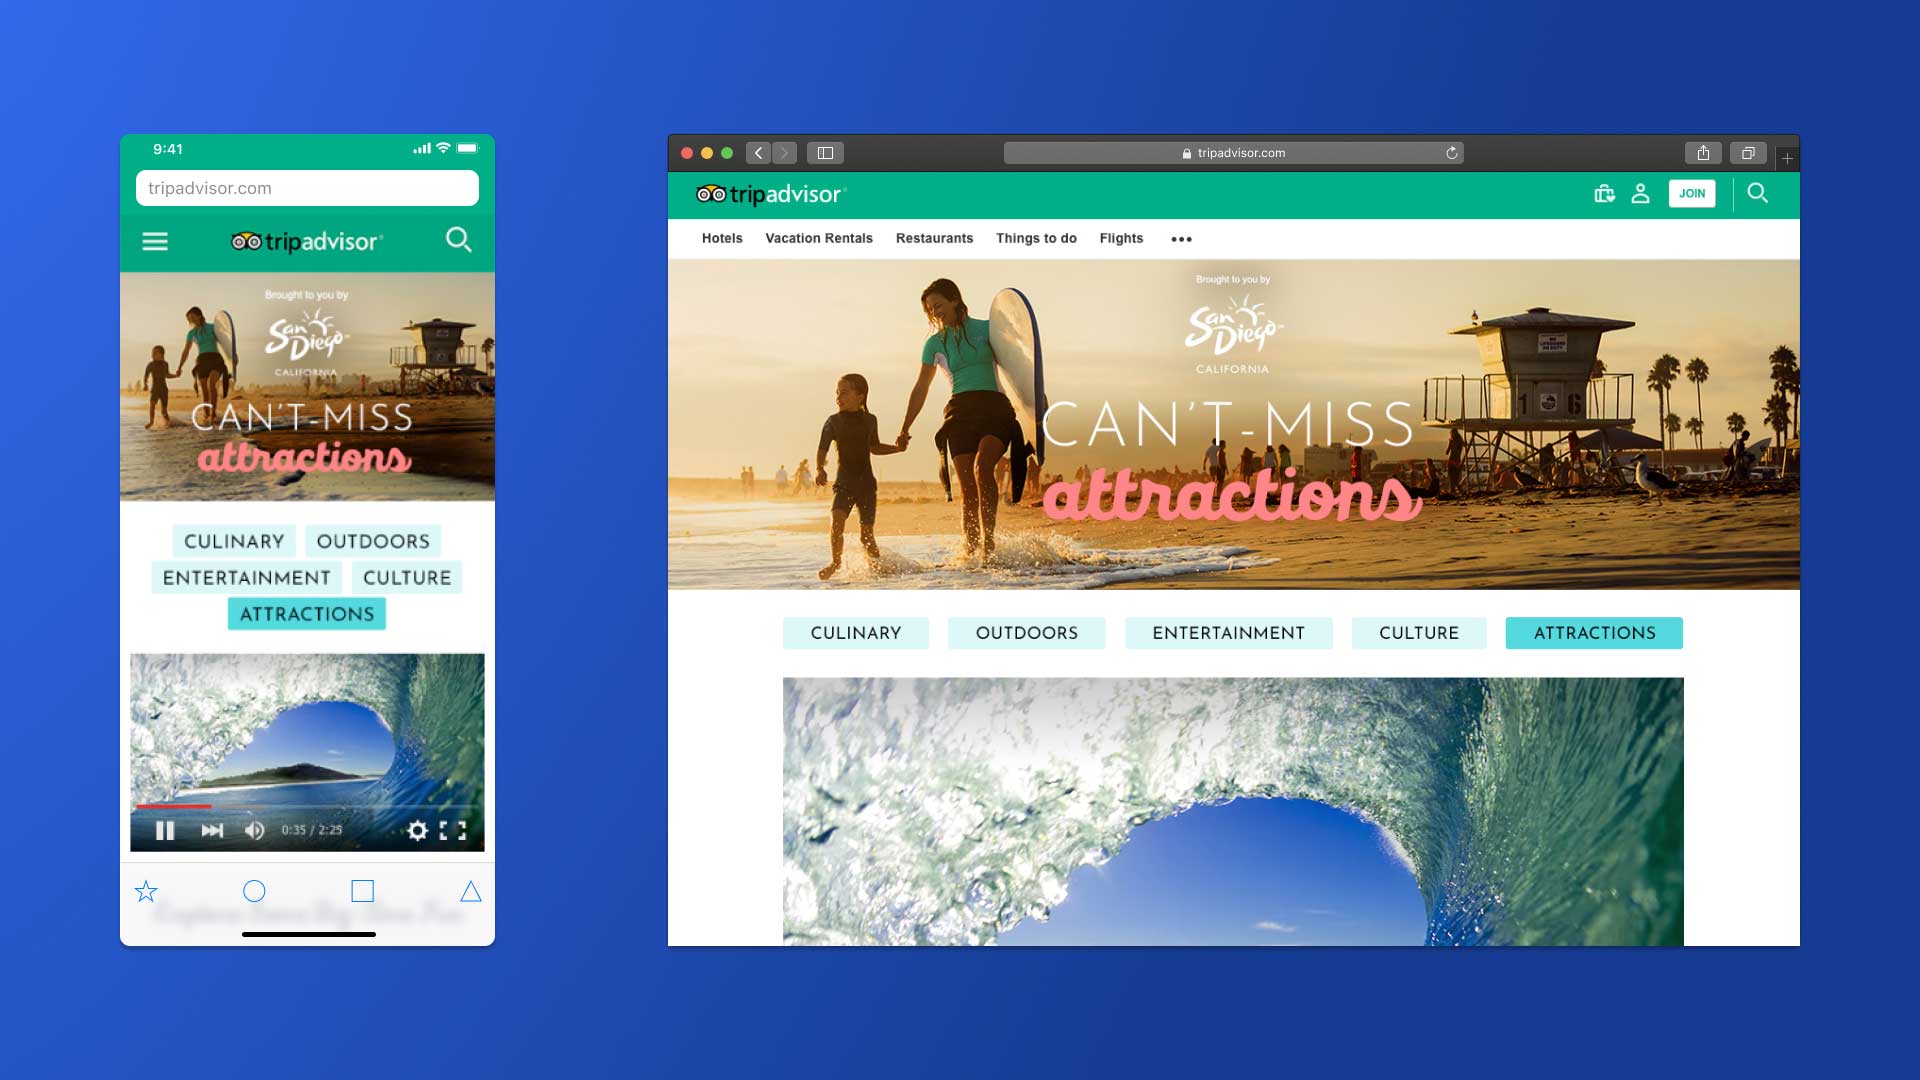 San Diego Tourism Campaign – Tripadvisor – Mobile & Desktop Experience